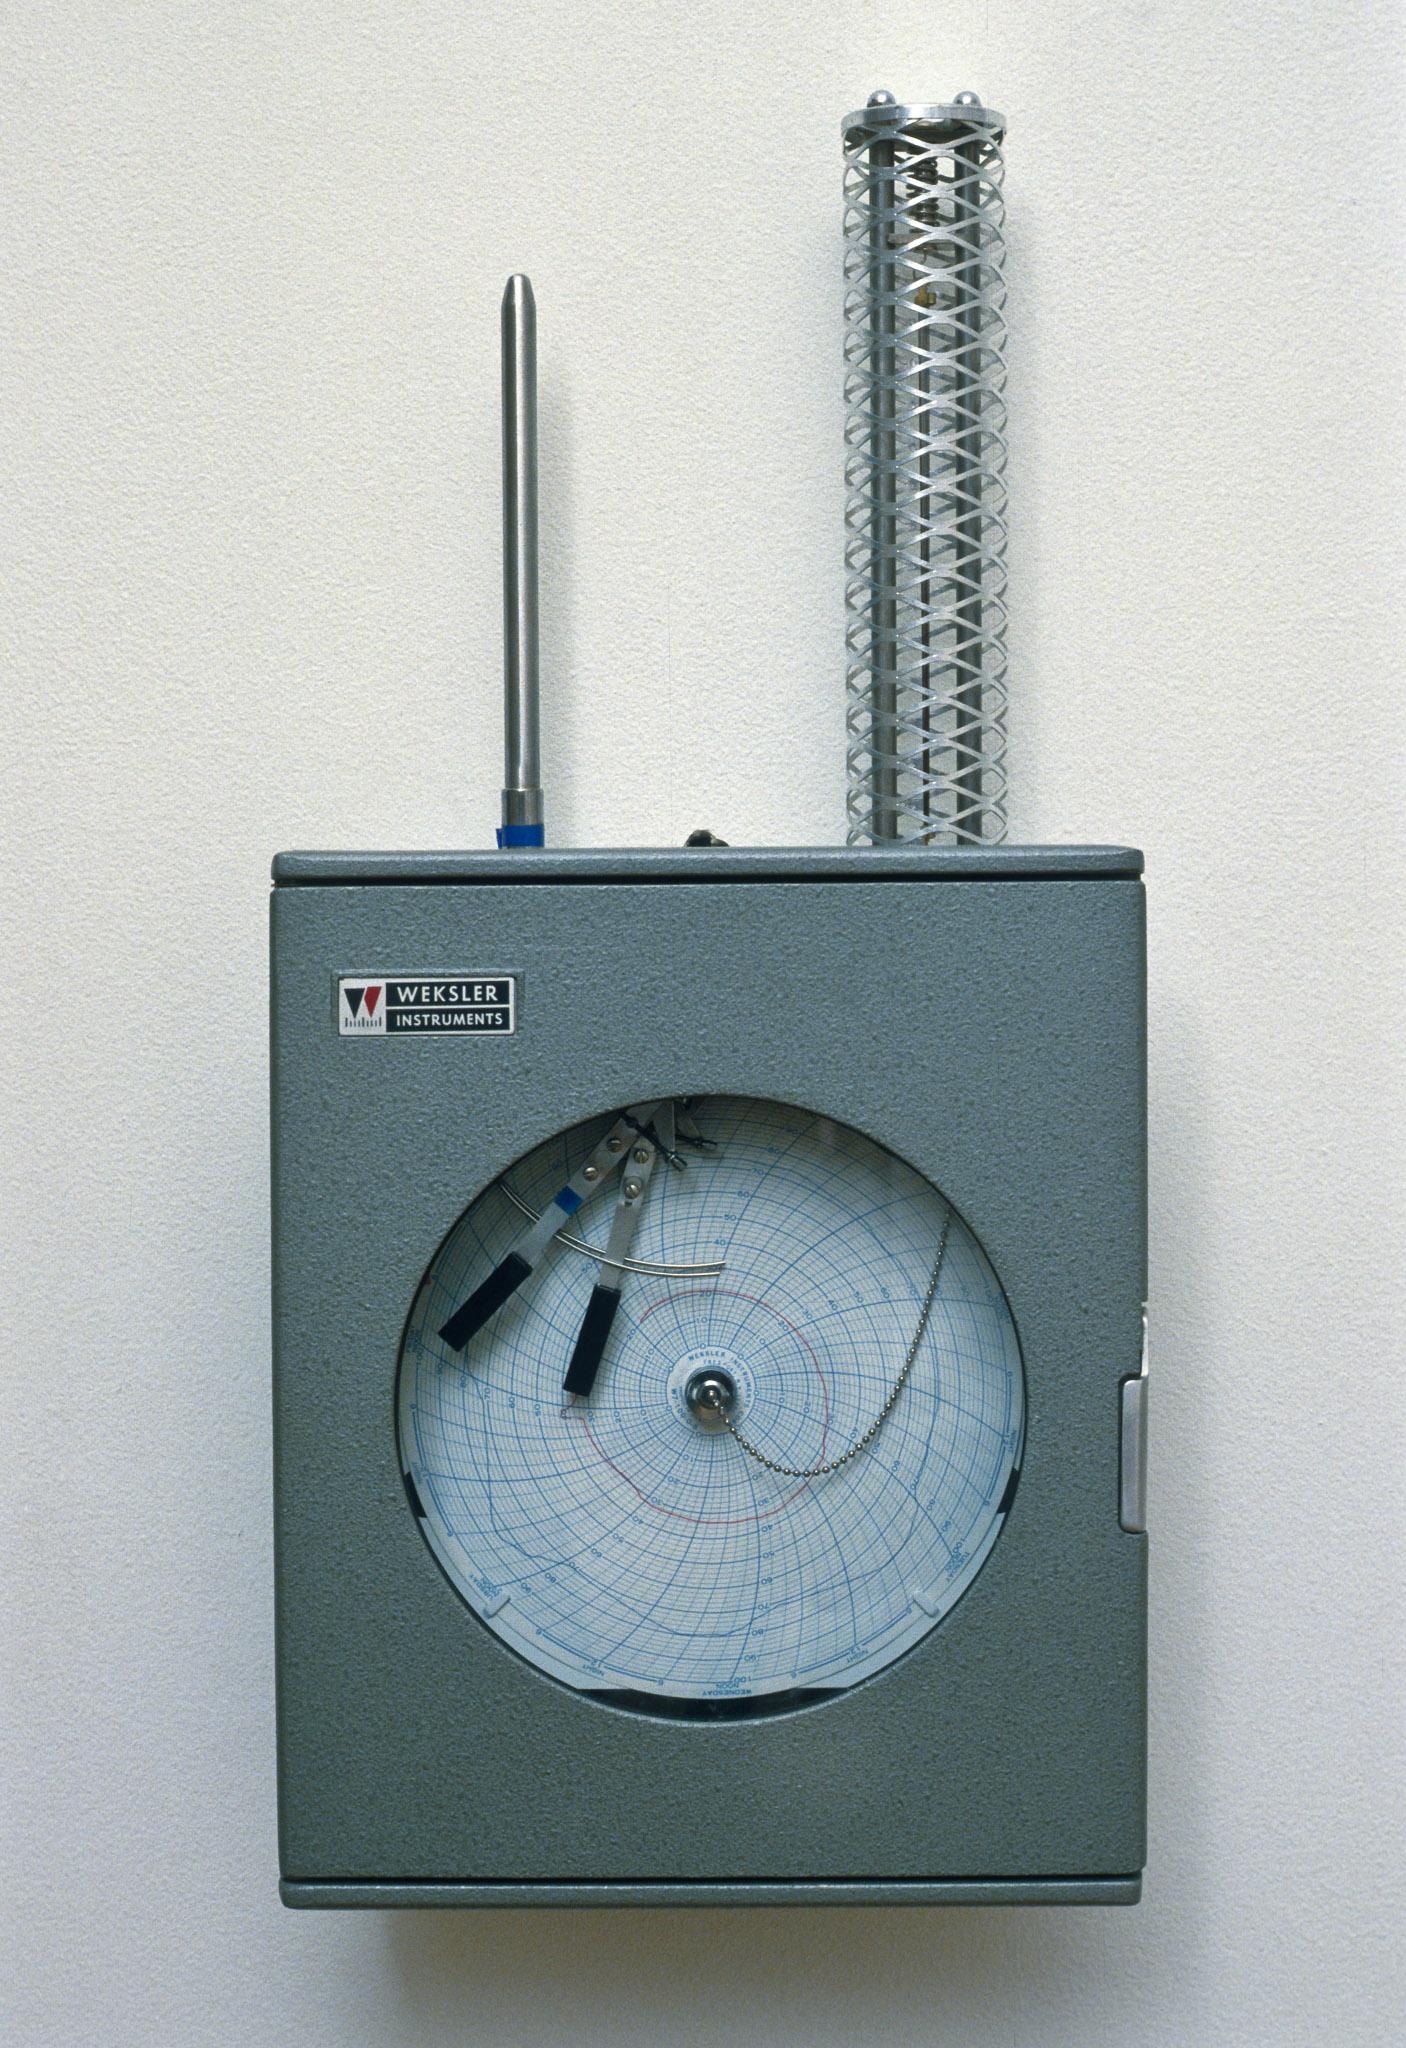 a meter recording temperature